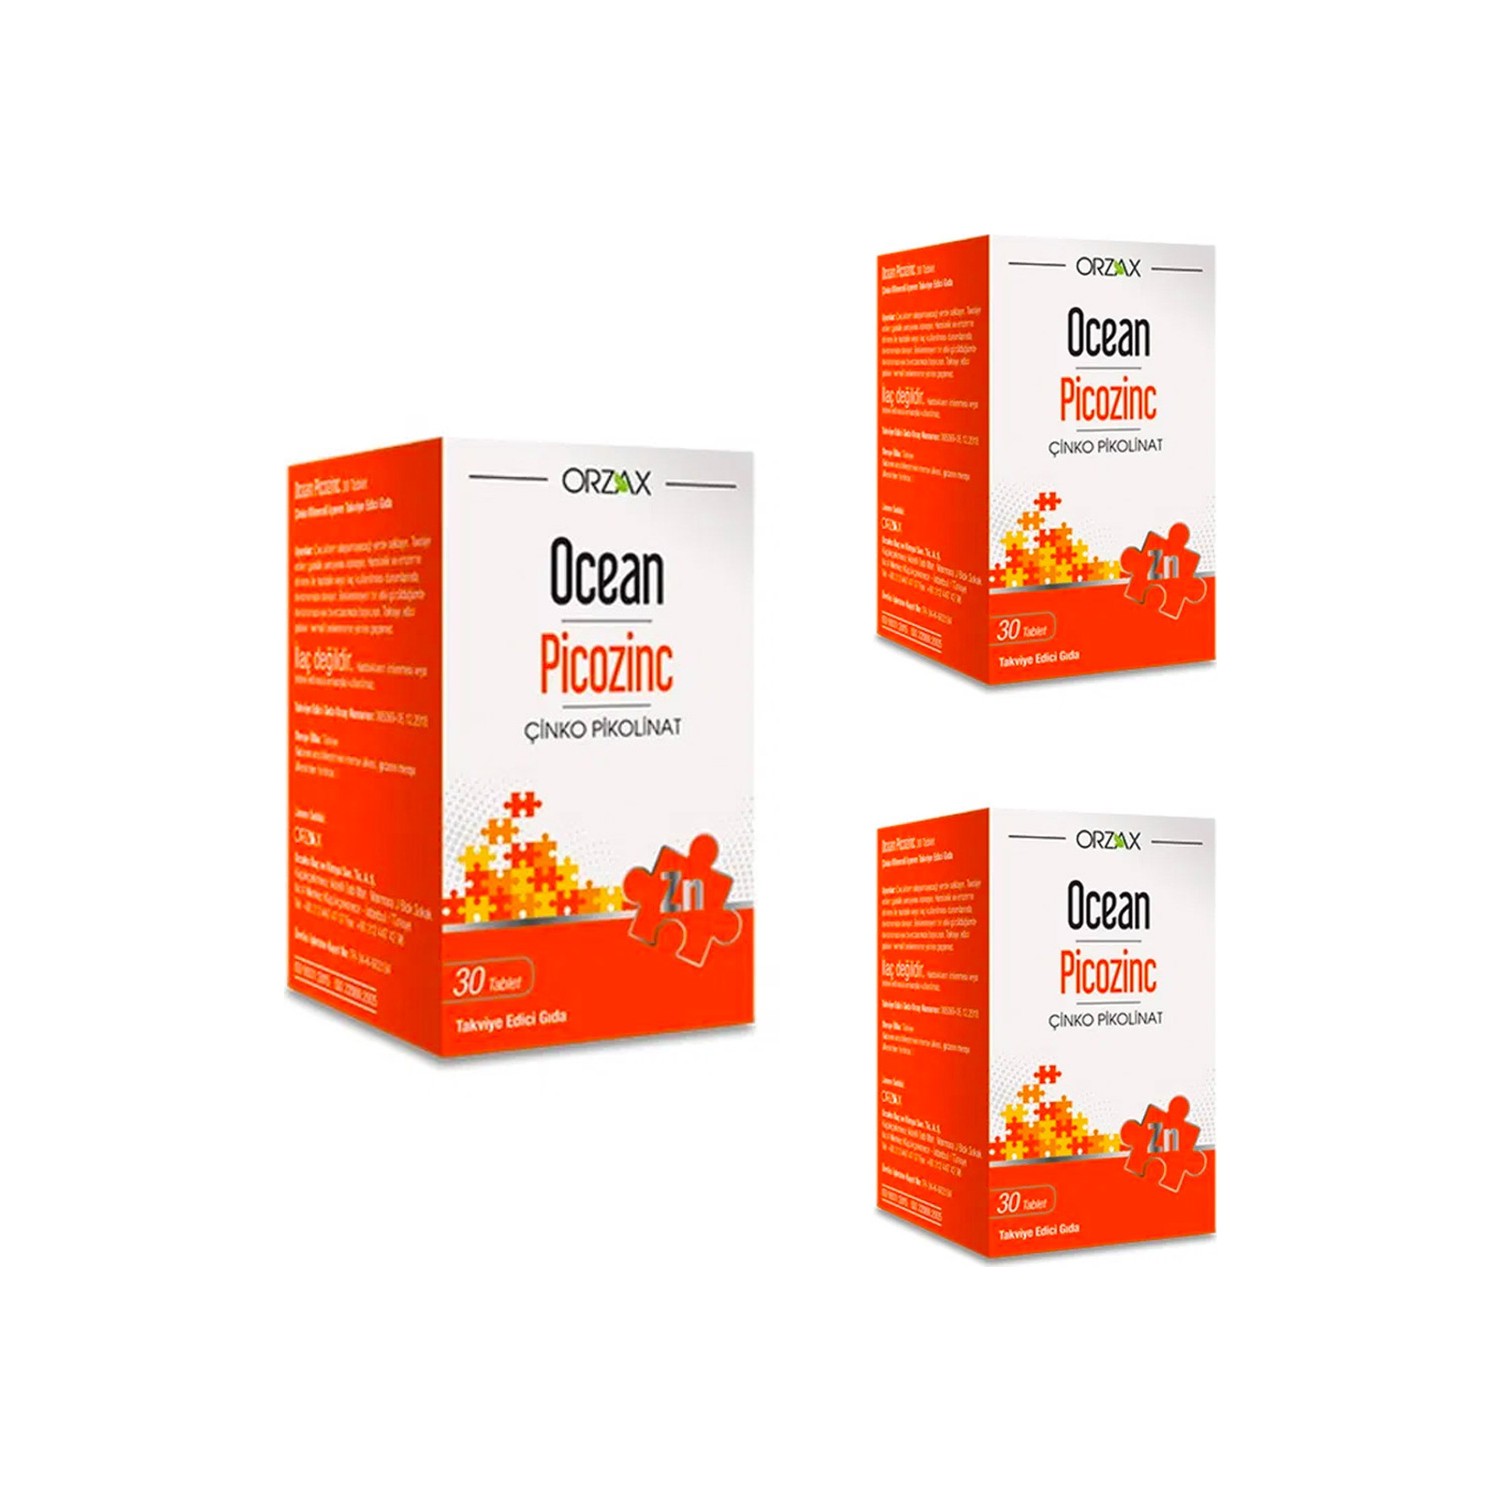 Пищевая добавка Orzax Ocean Picozinc Cinko Picolinate, 3 упаковки по 30 таблеток цена и фото